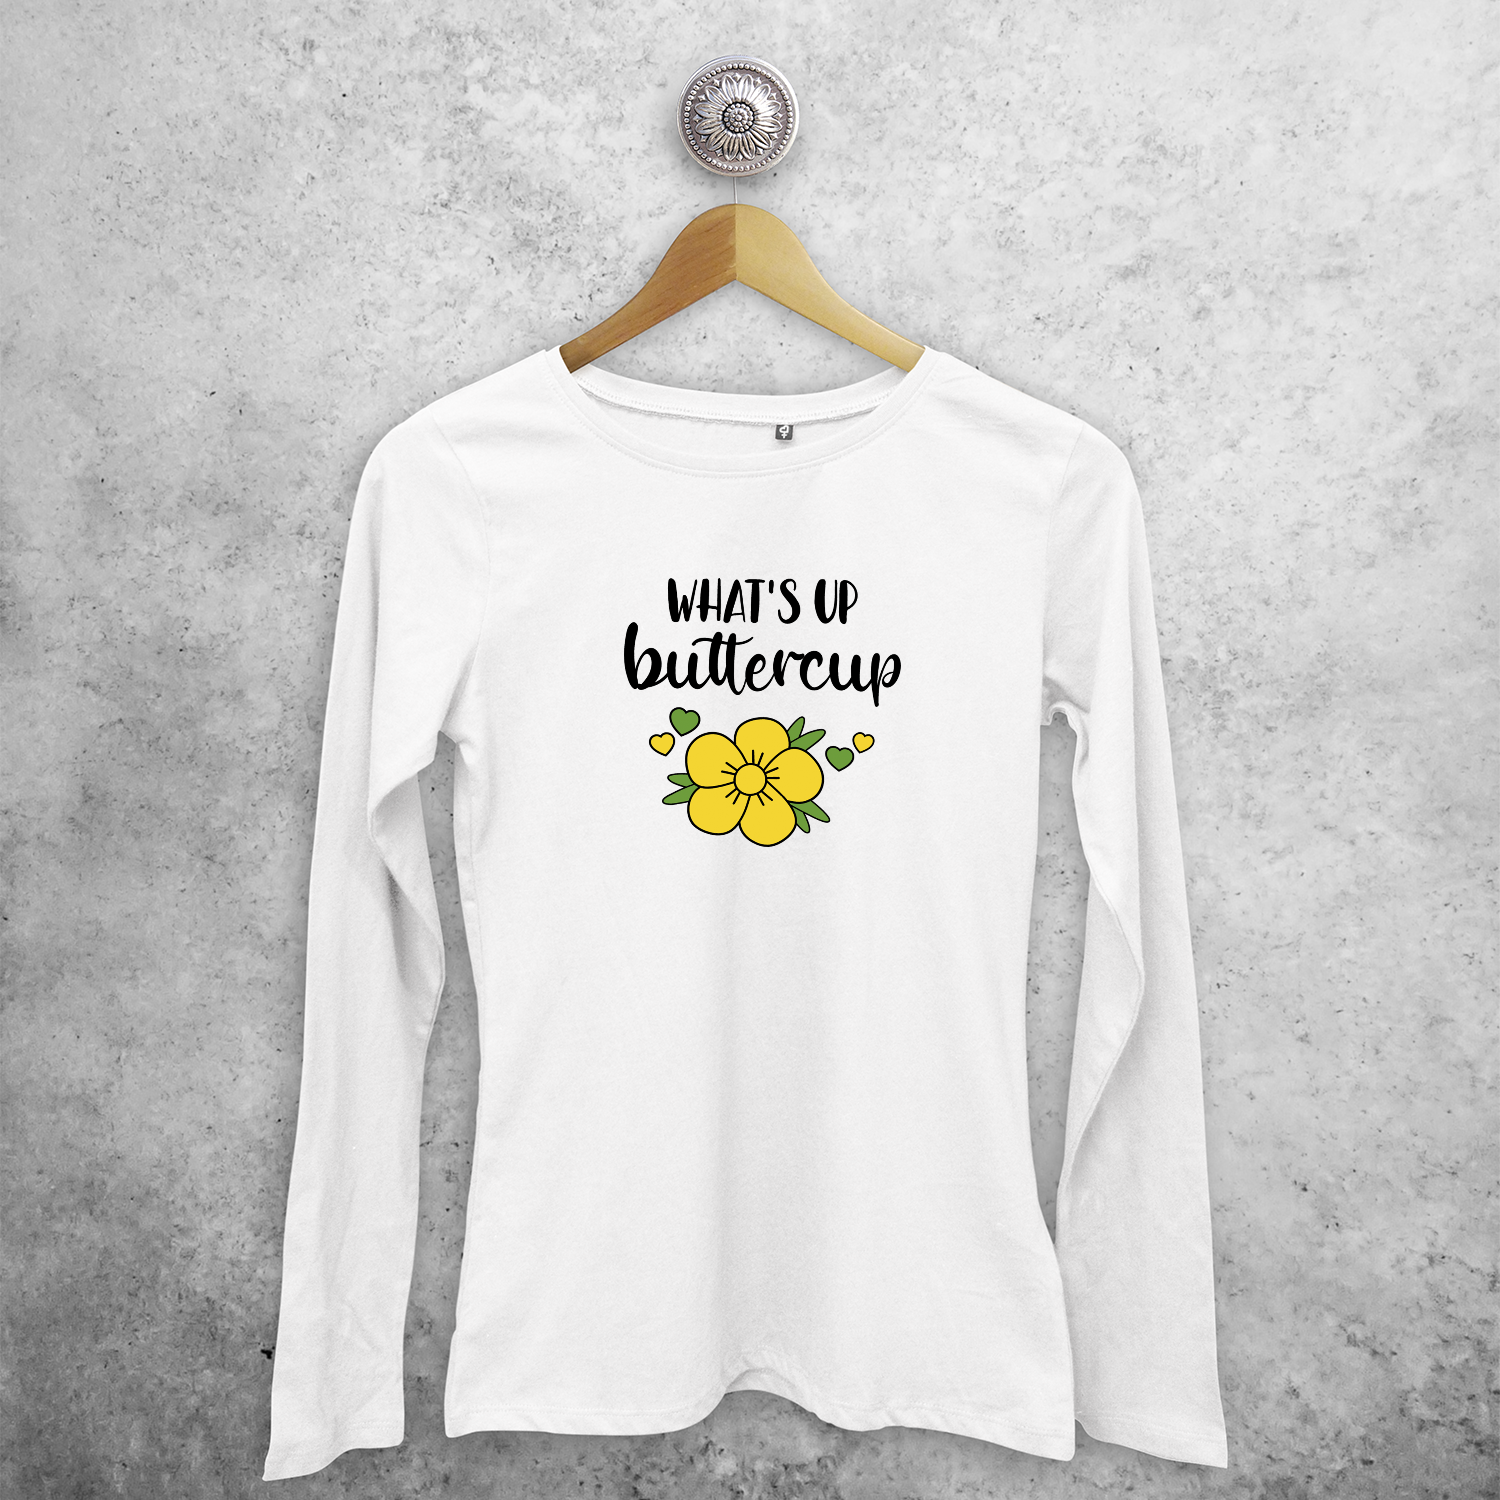 'What's up buttercup' adult longsleeve shirt